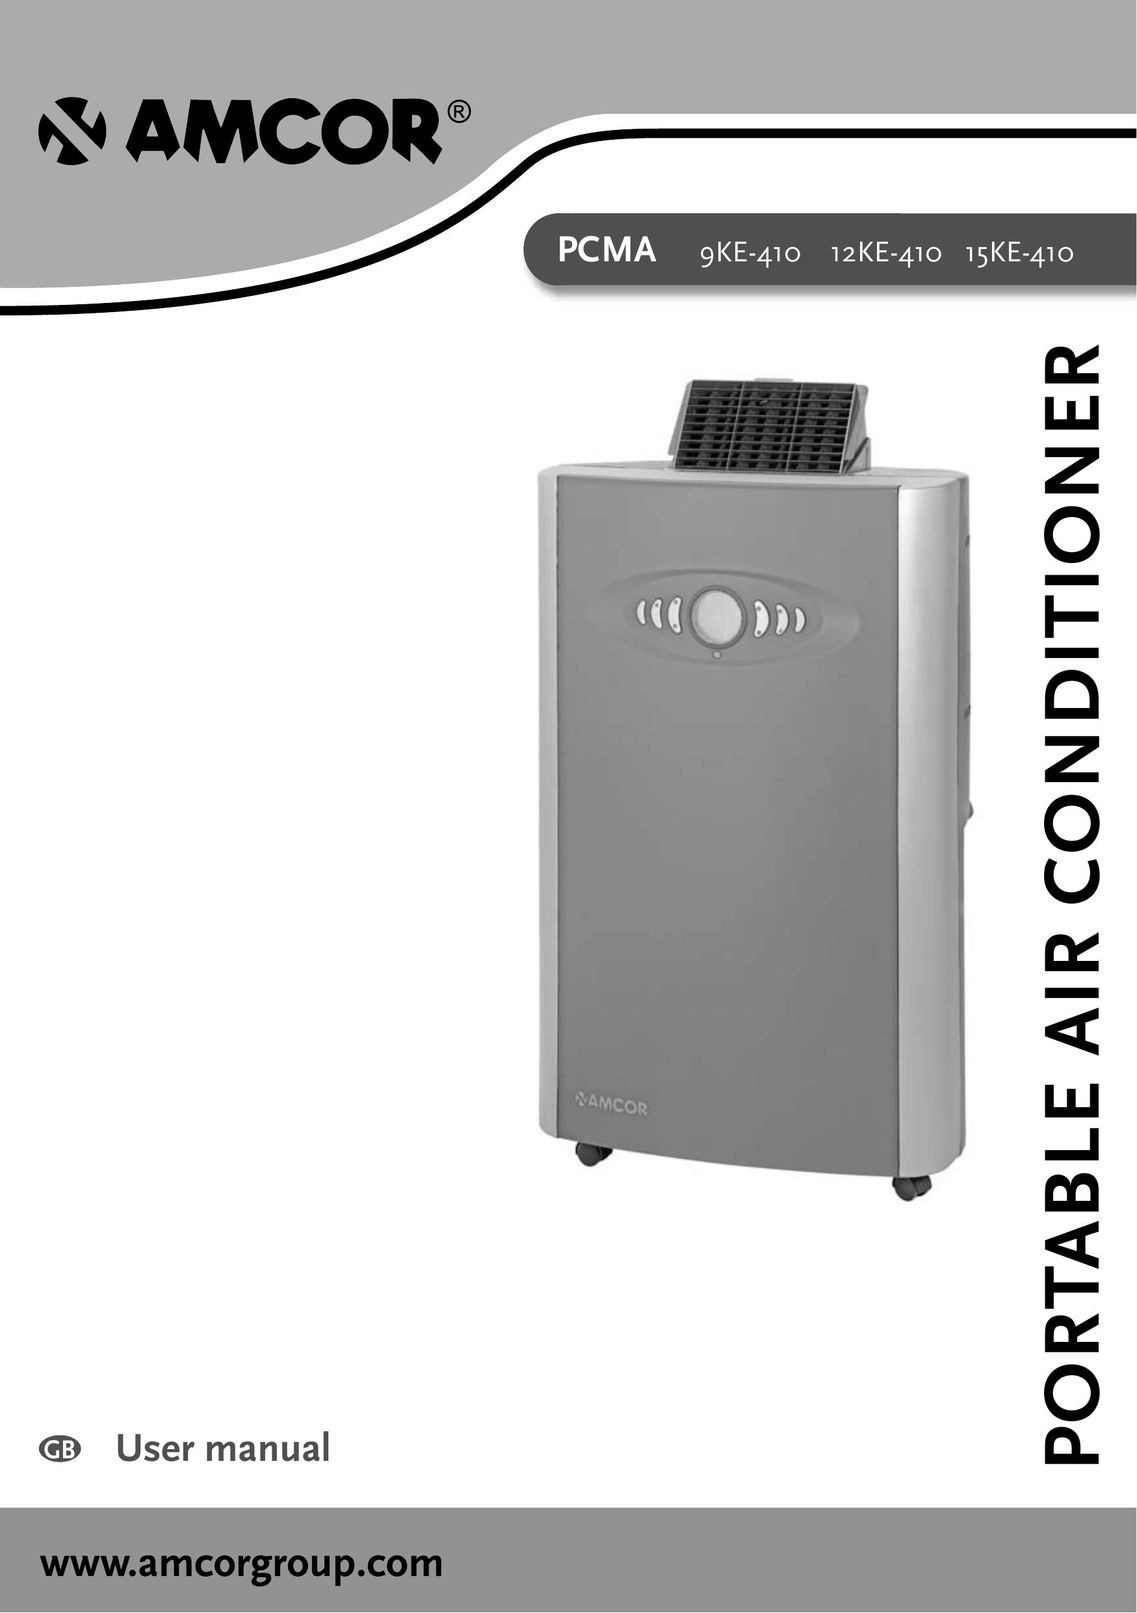 Amcor PCMA 15KE-410 Air Conditioner User Manual